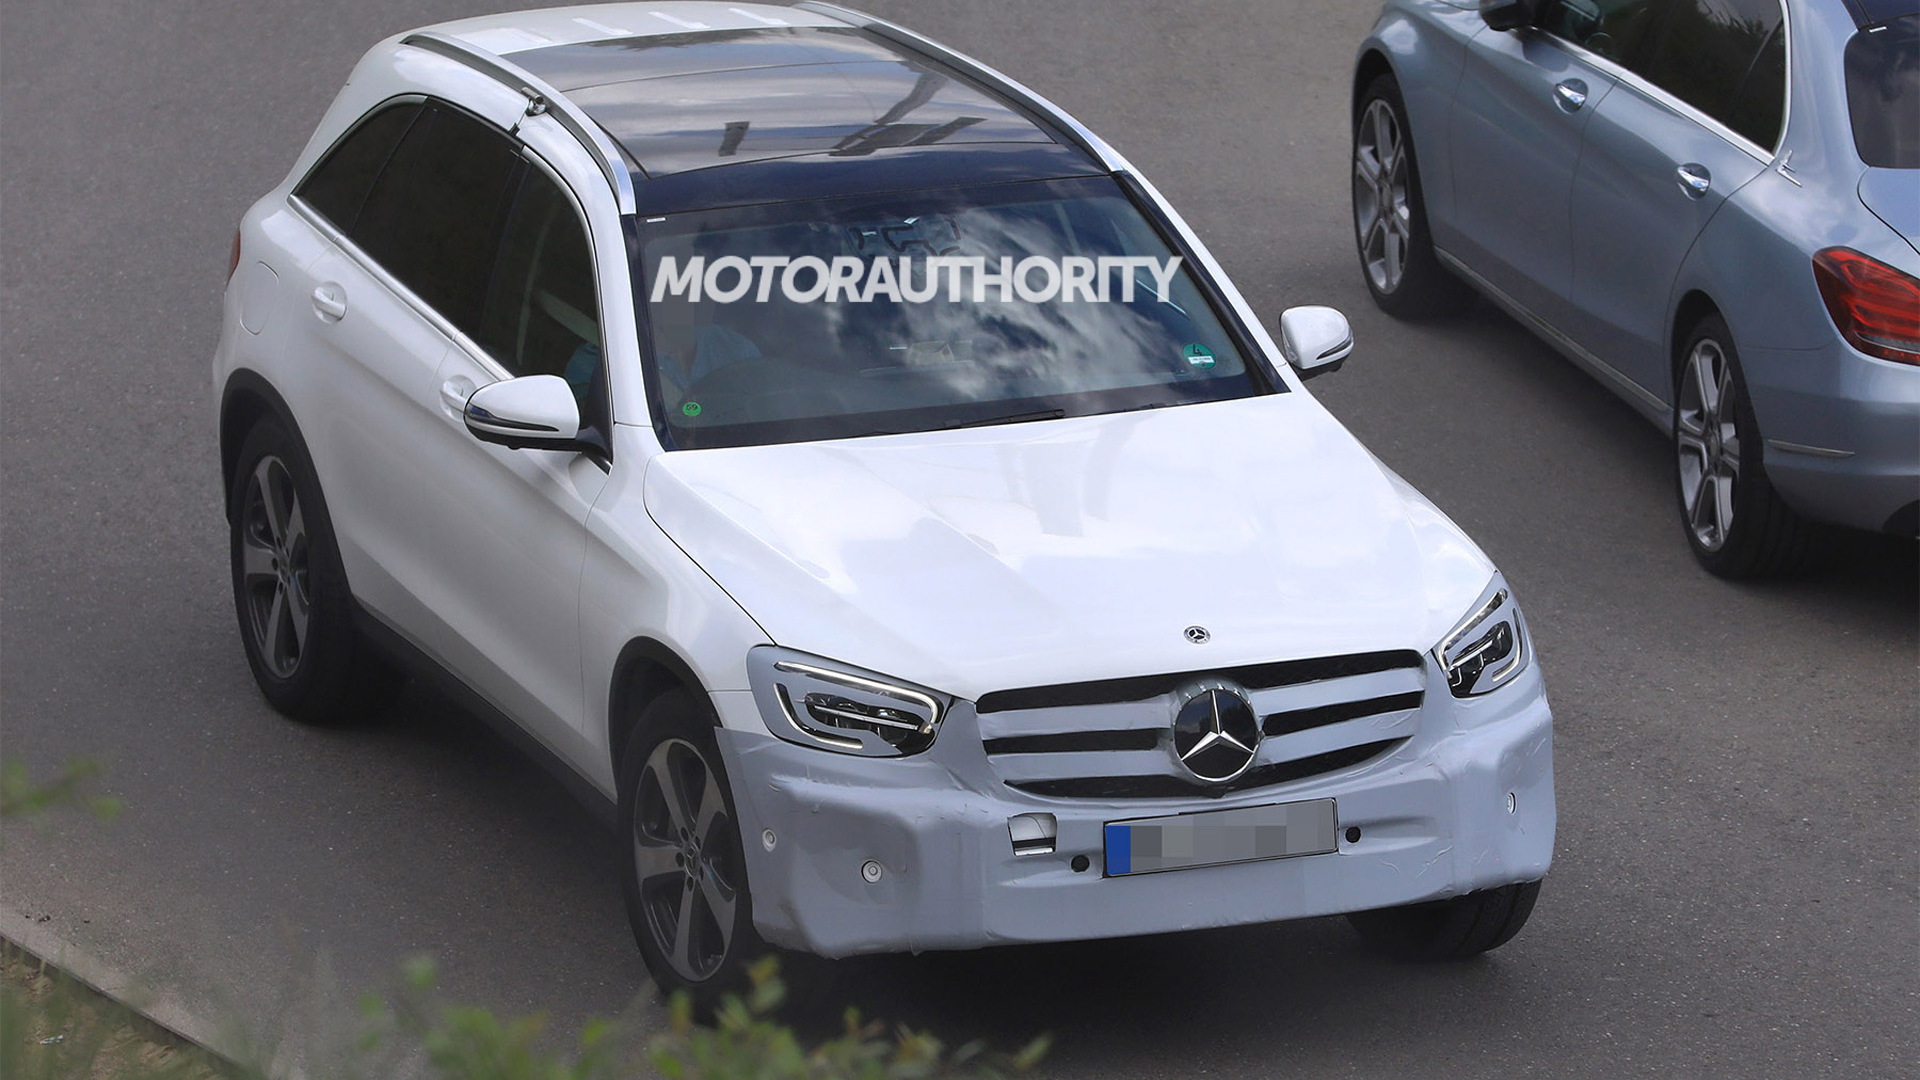 2020 Mercedes-Benz GLC facelift spy shots - Image via S. Baldauf/SB-Medien